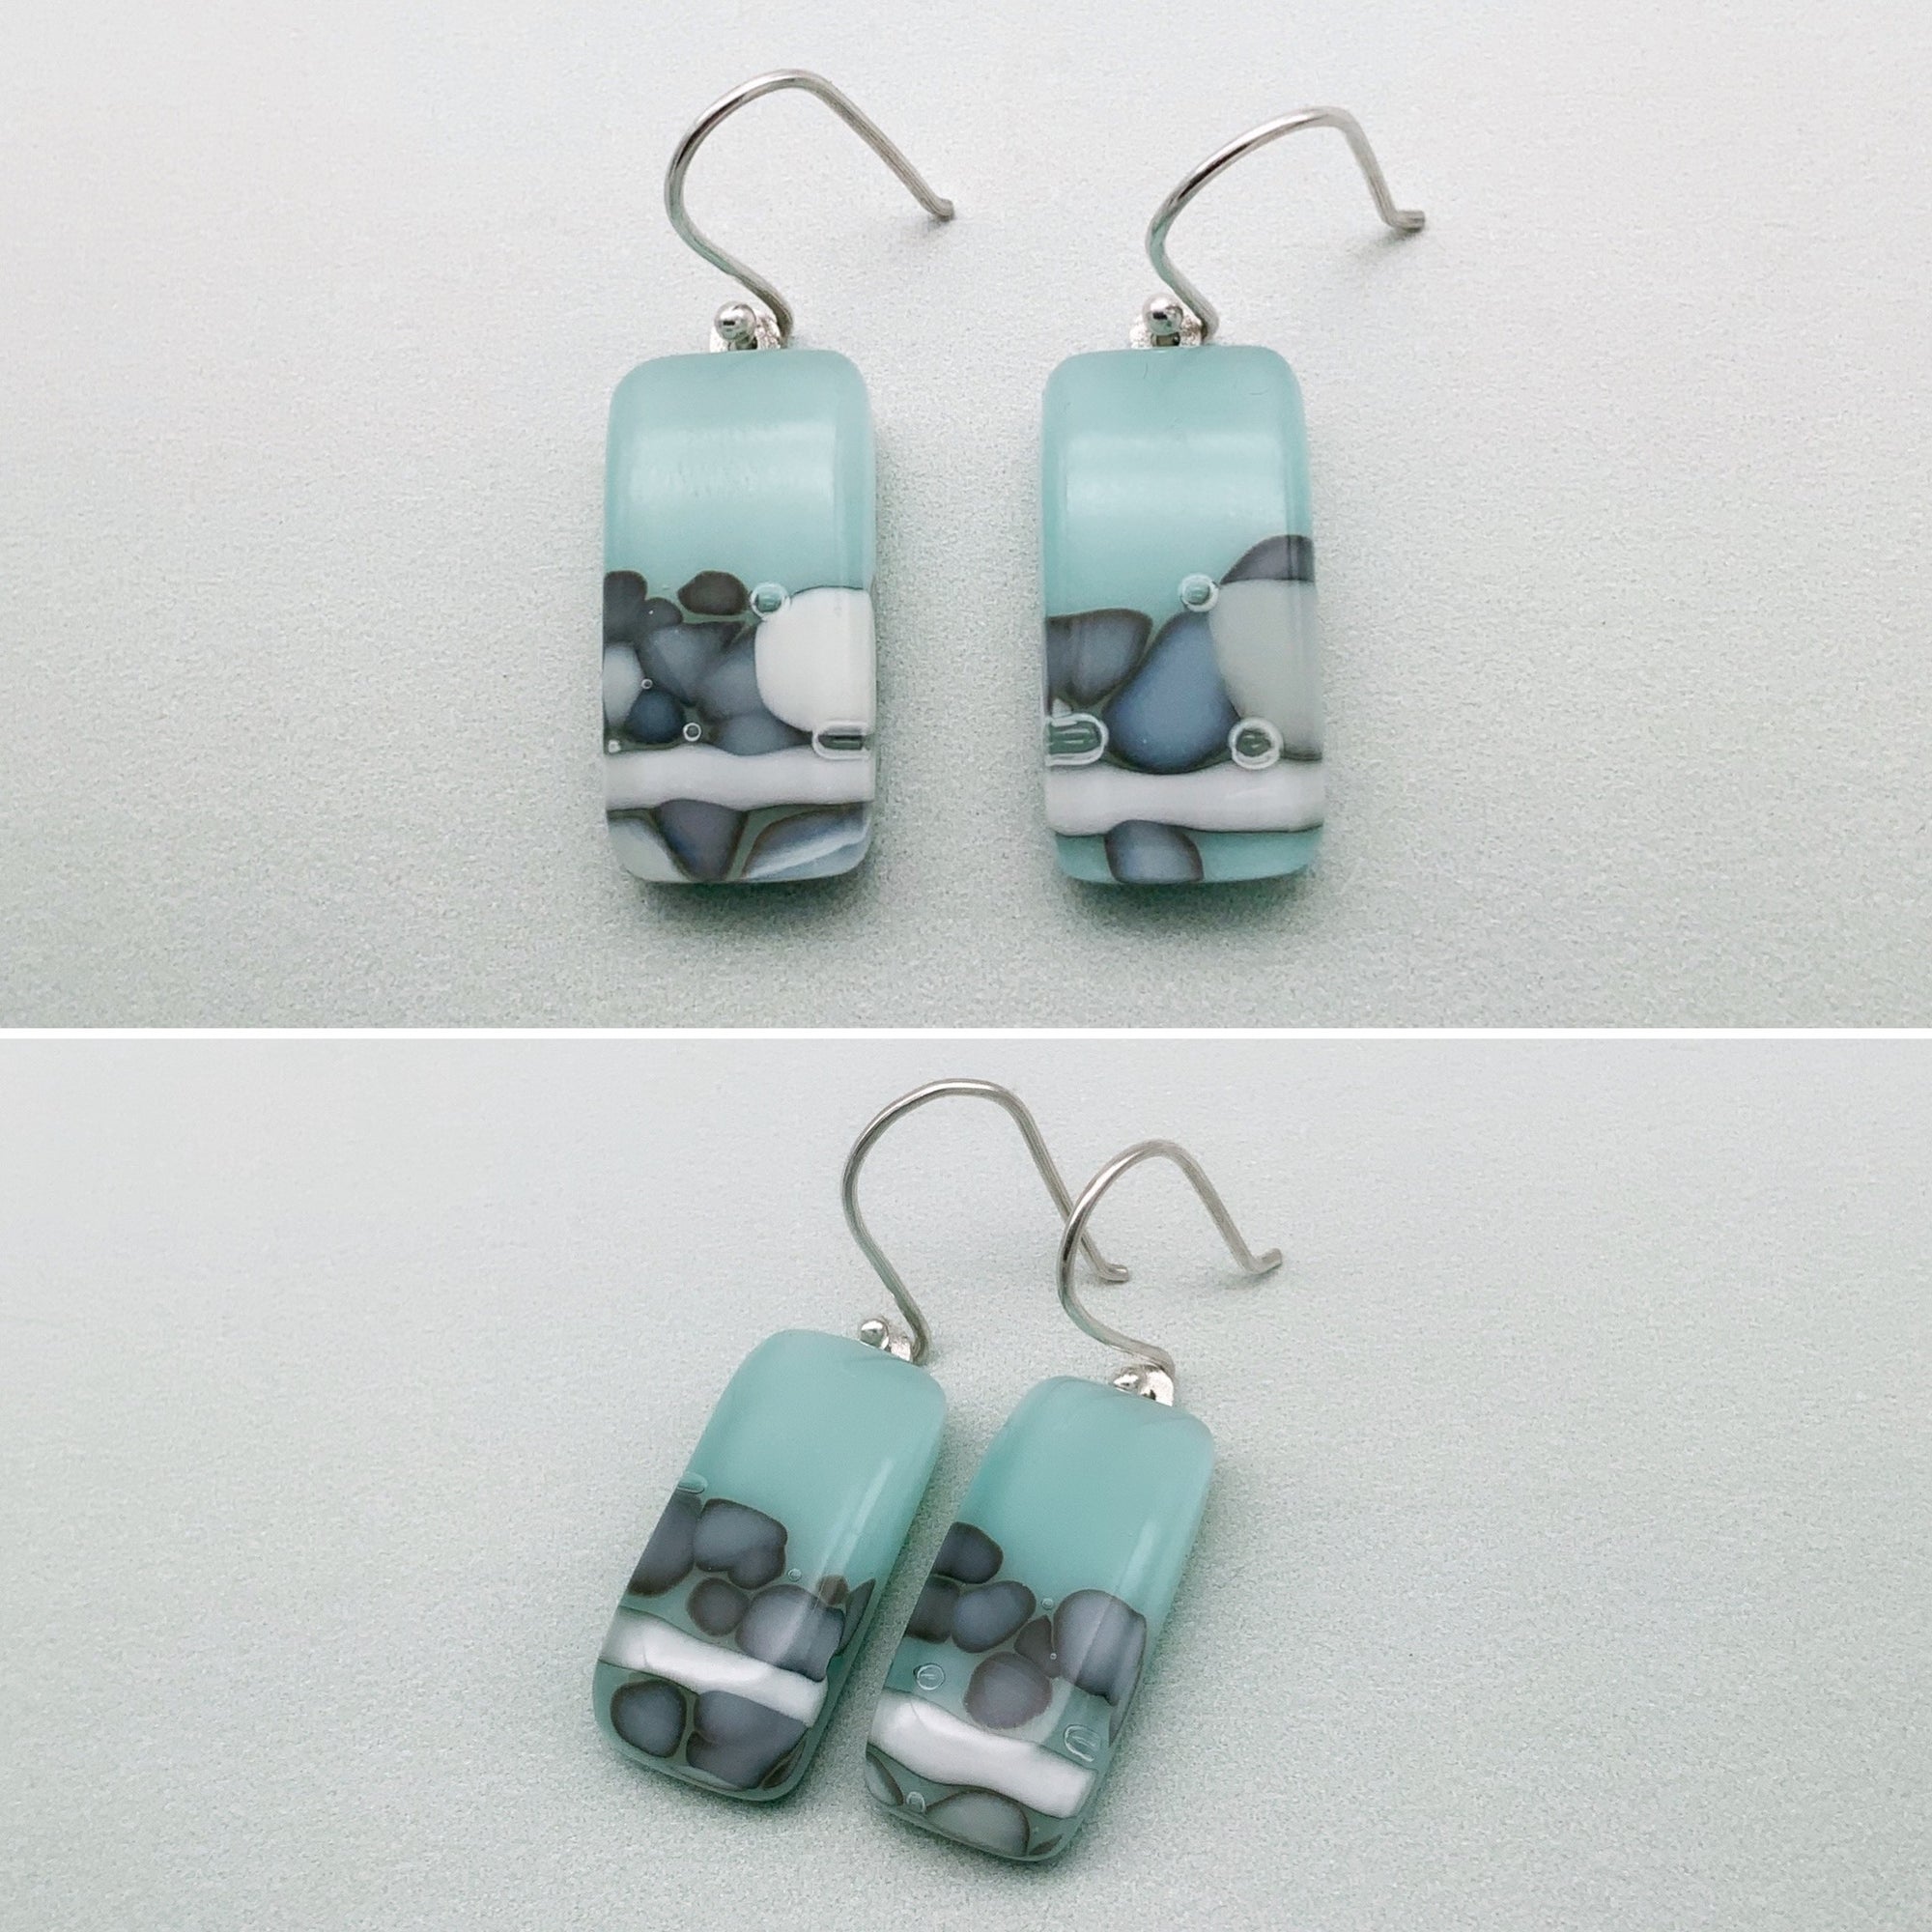 Nougat pale blue long glass dangle earrings